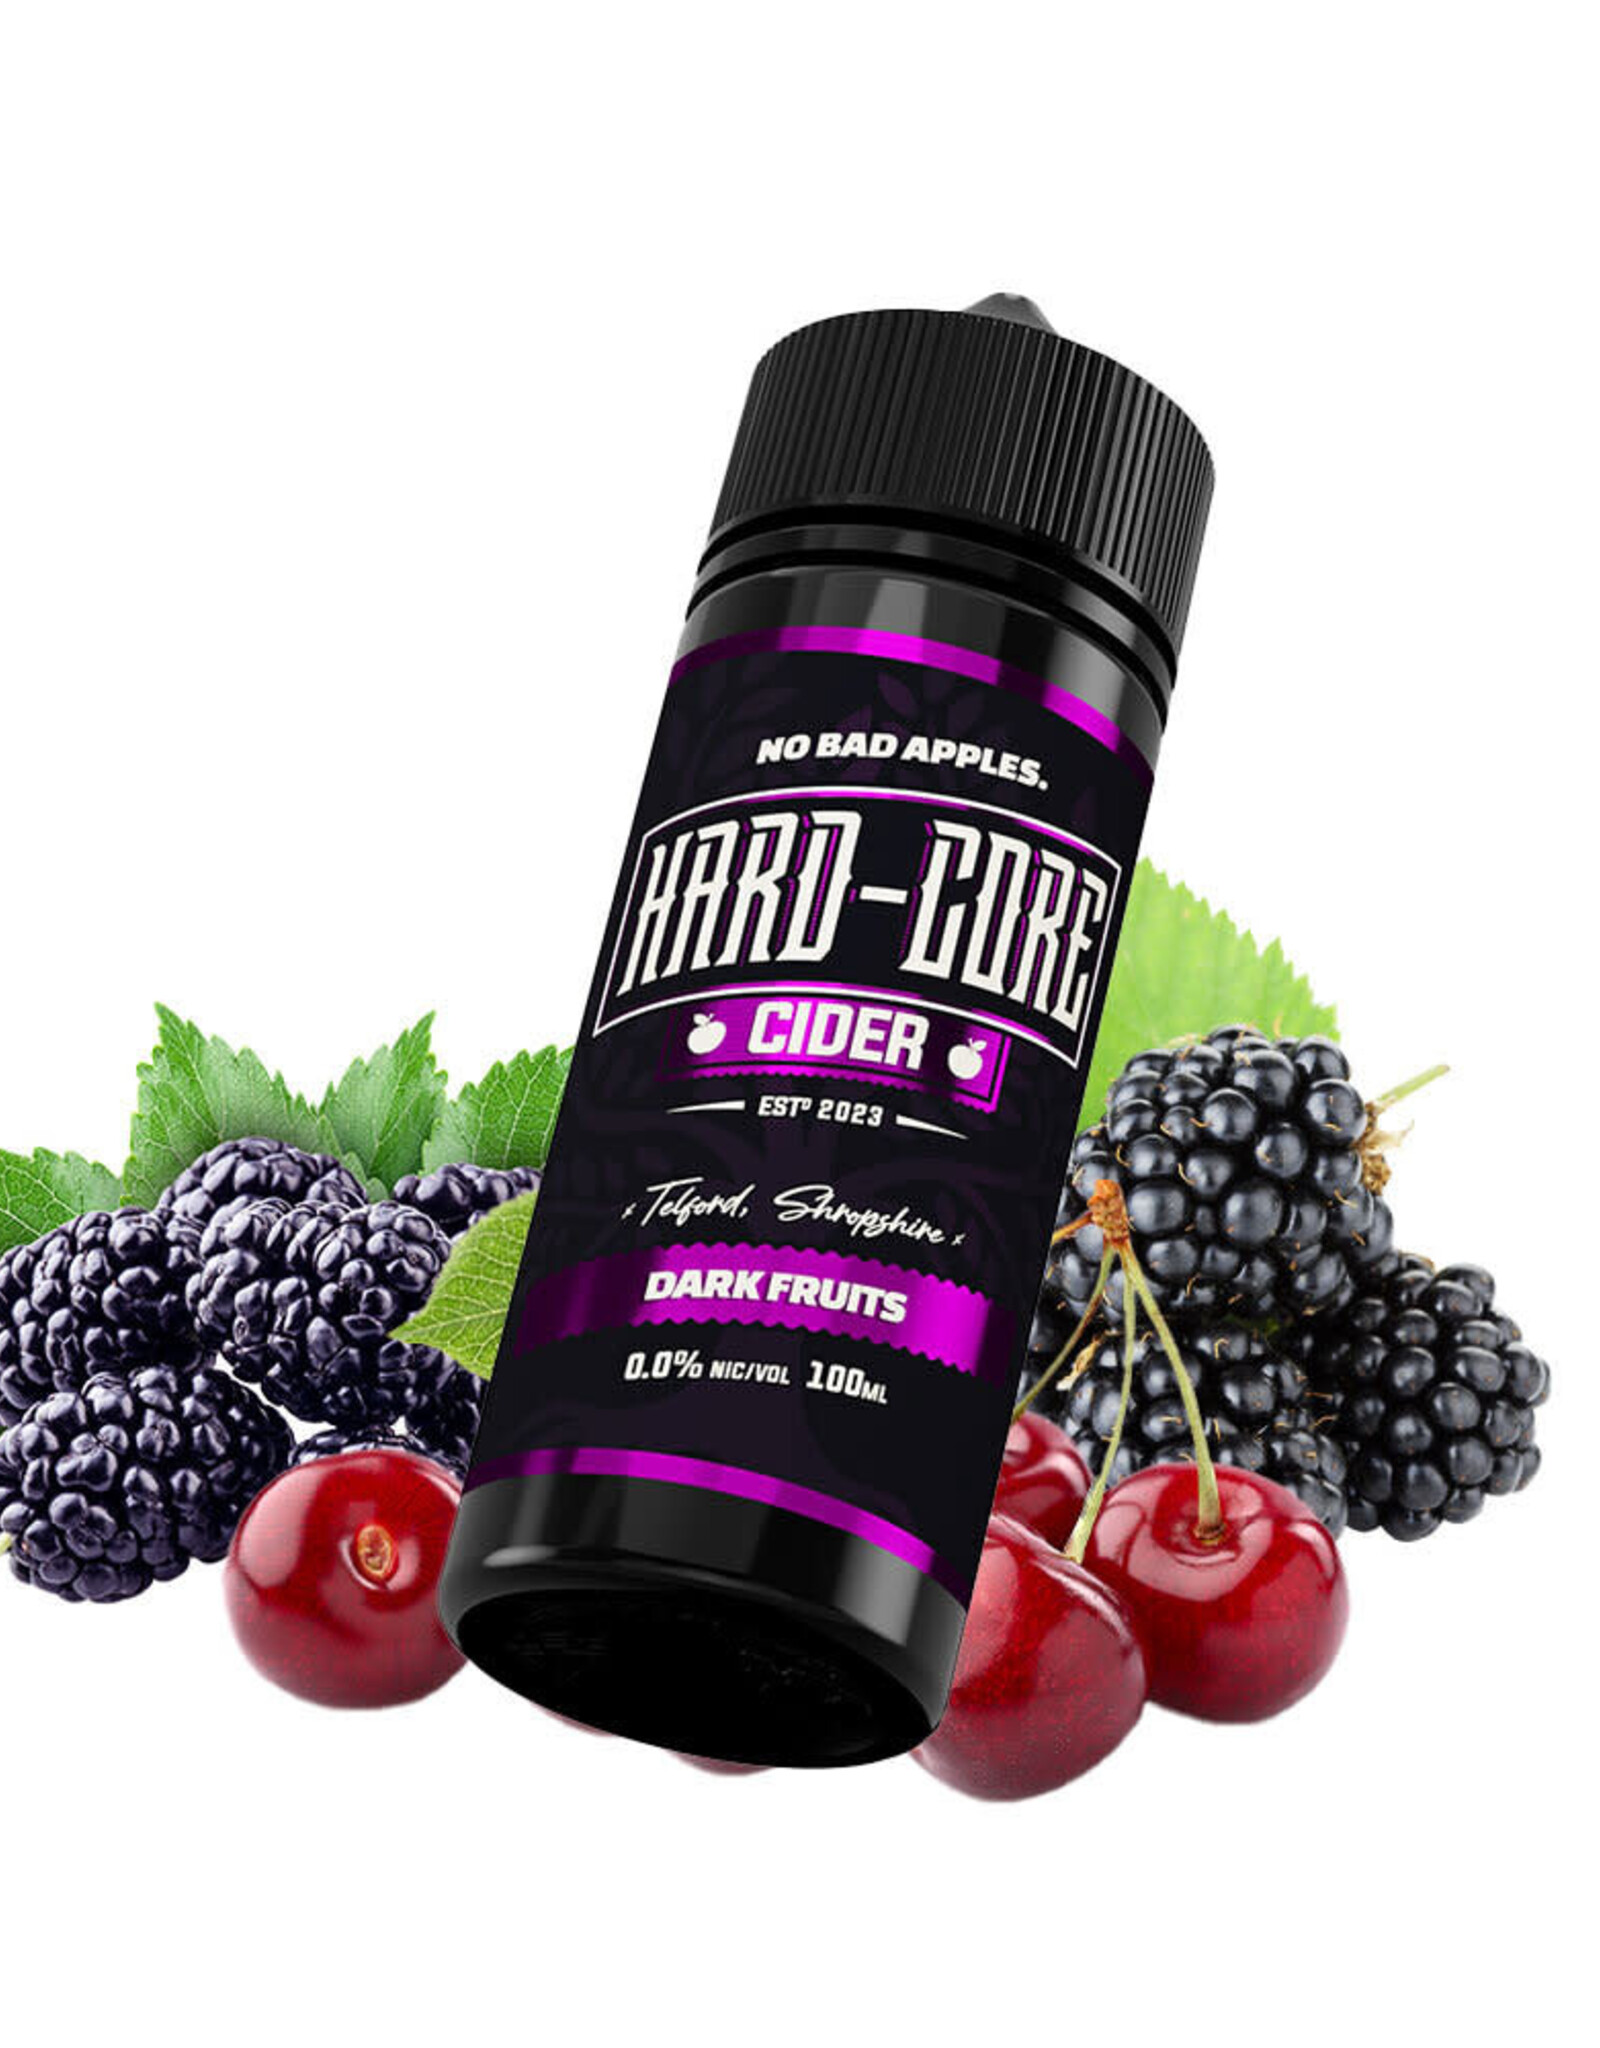 No Bad Apples Hard-Core Cider - Dark Fruits 100ml